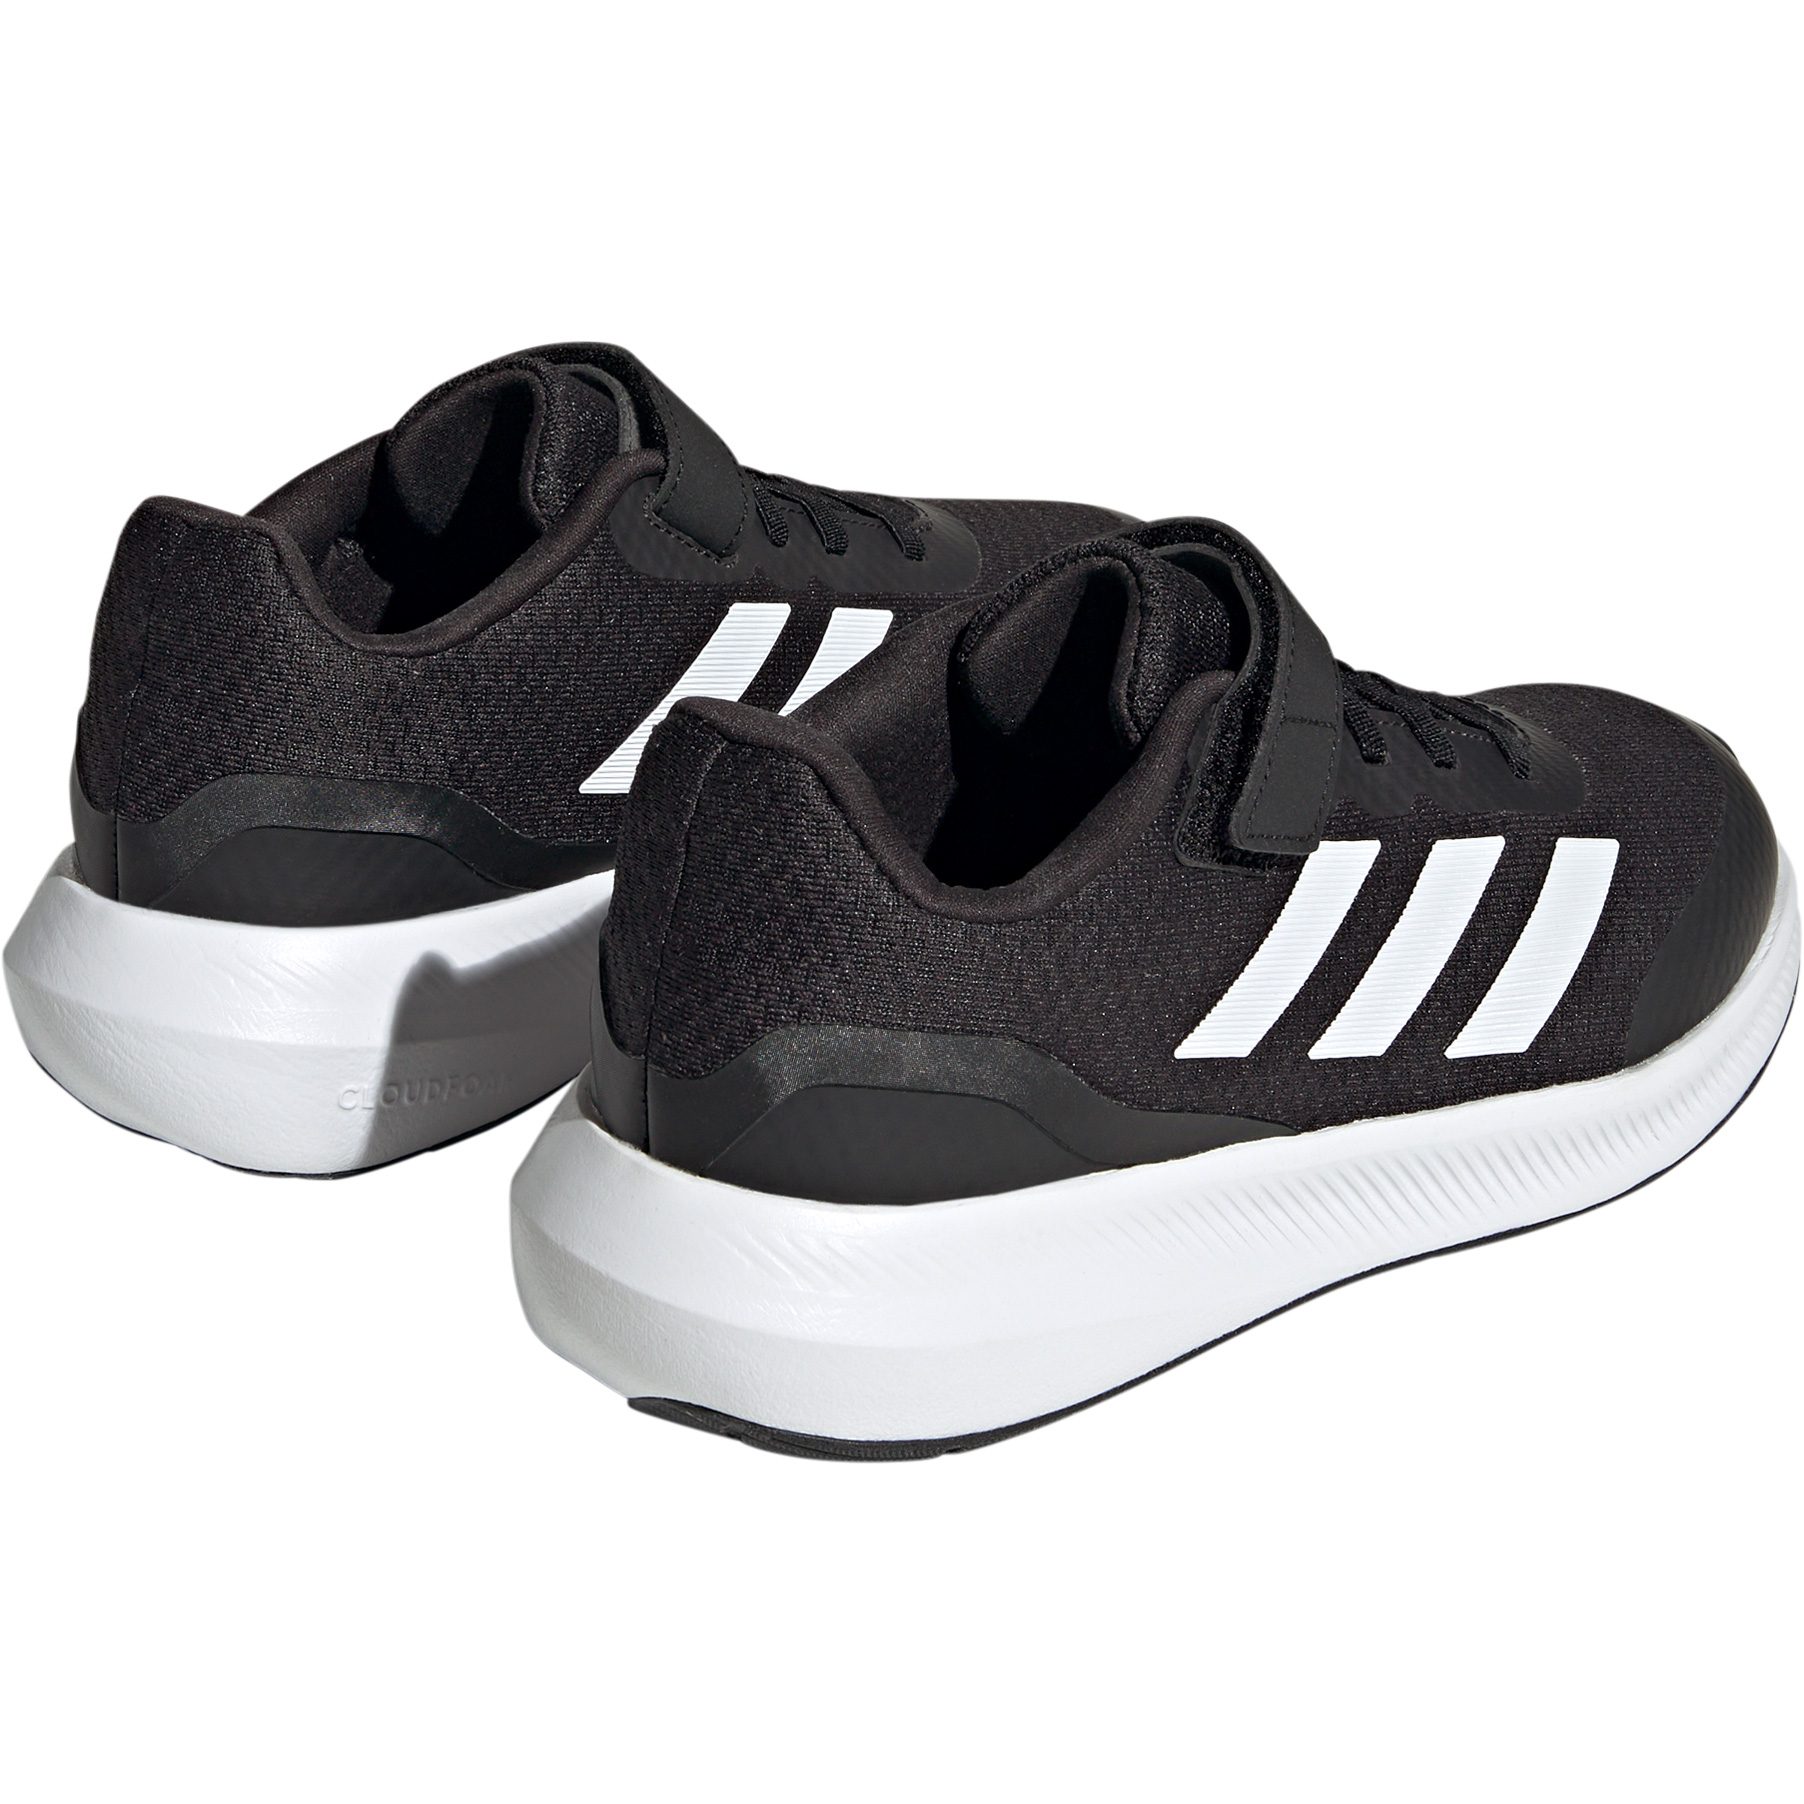 3.0 Sport Sport black Shoes Kids at Shop Bittl core adidas - Runfalcon Running